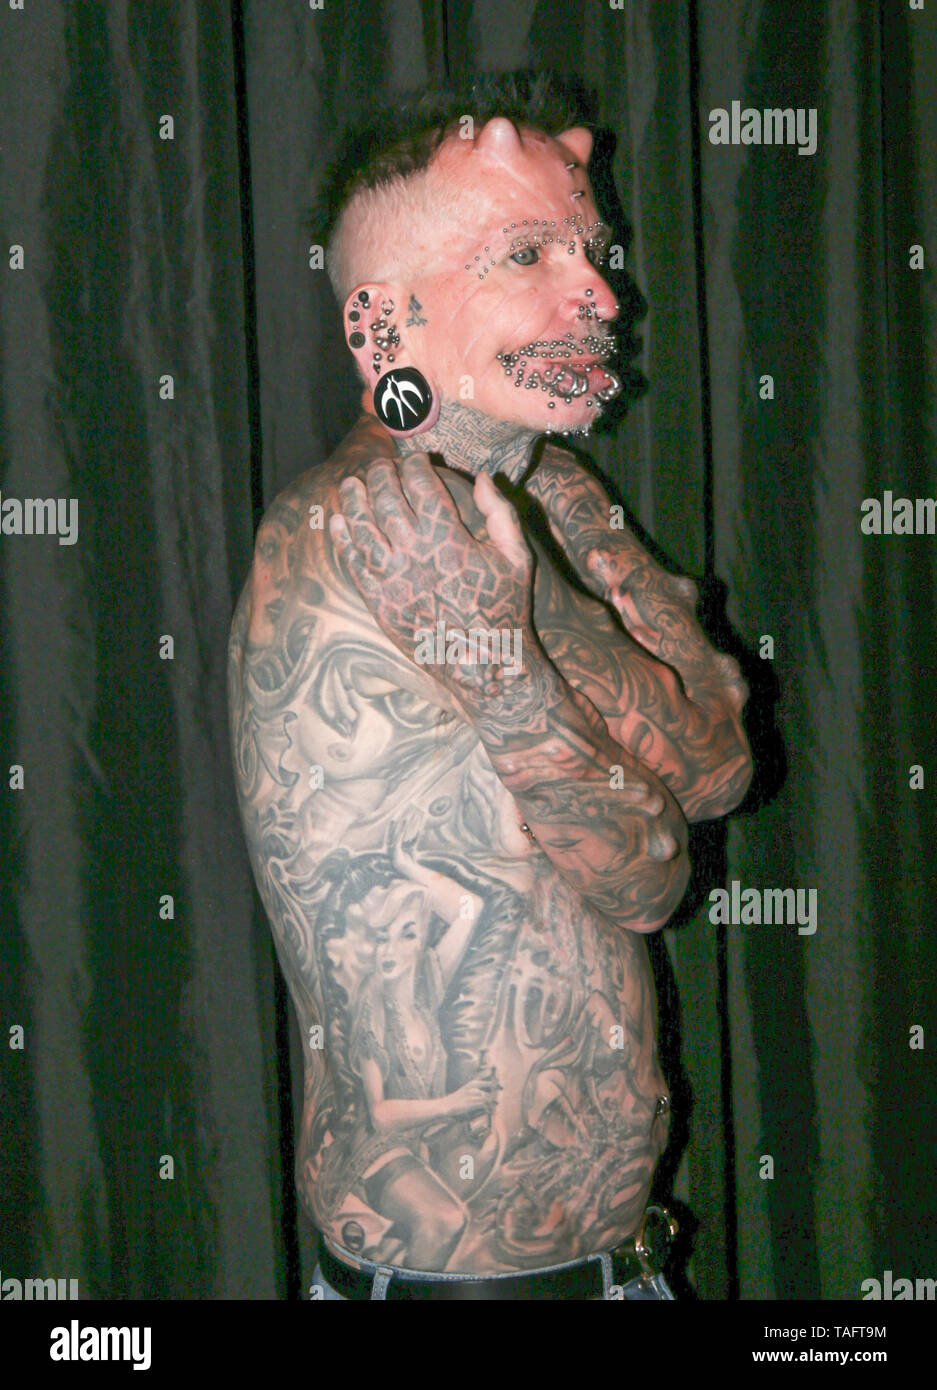 Watch: World's largest tattoo honors rapper Takeoff - UPI.com